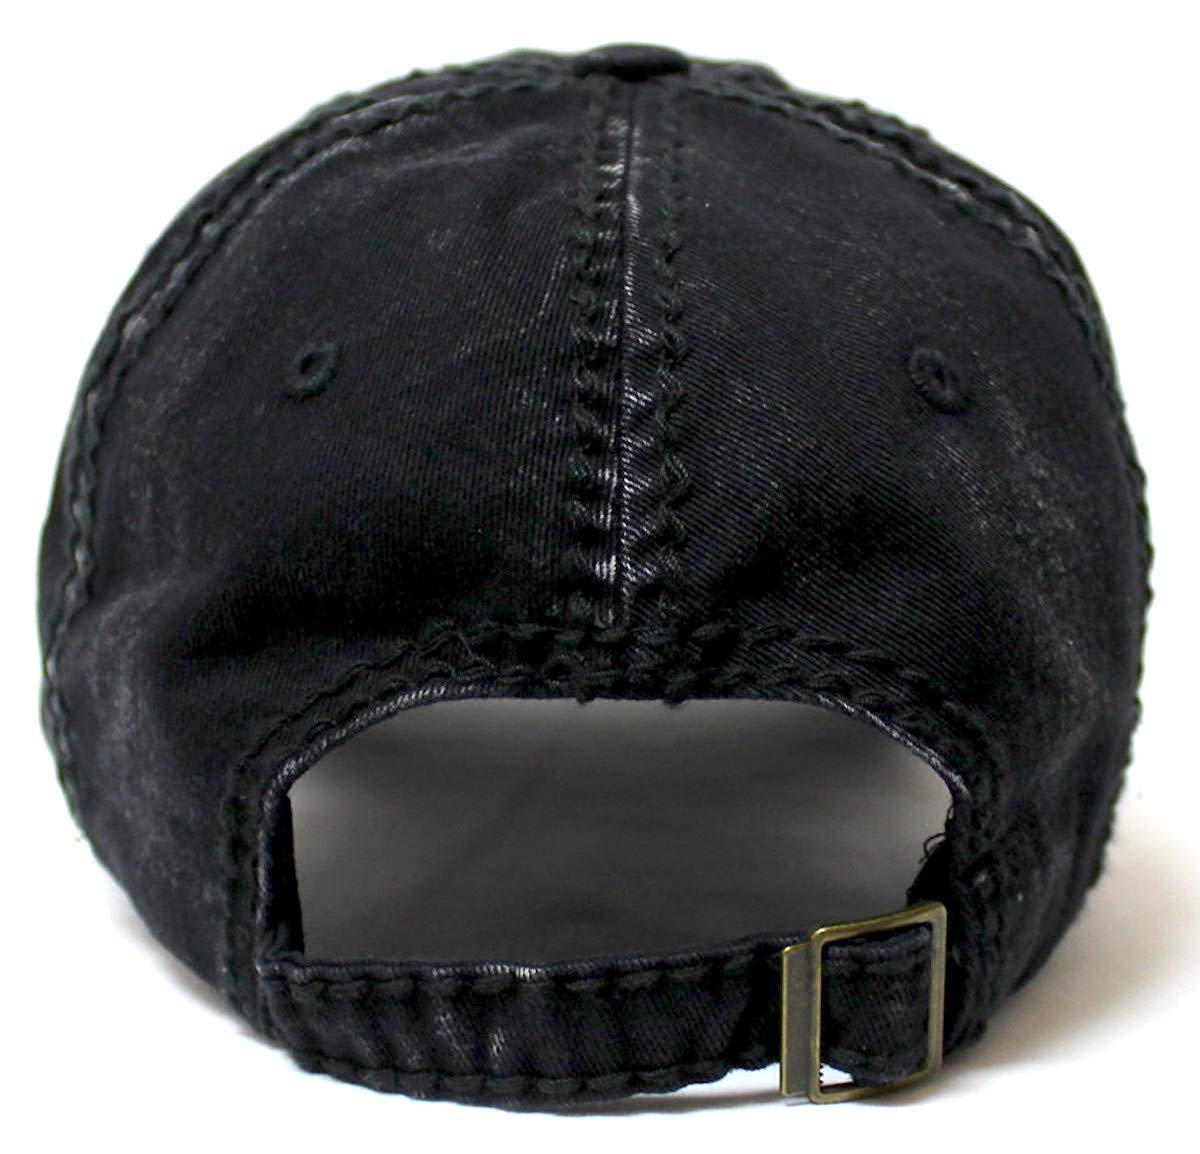 Classic Ballcap Blue Line Patriotic USA Police Department Memorial American Flag Vintage Hat, Black - Caps 'N Vintage 